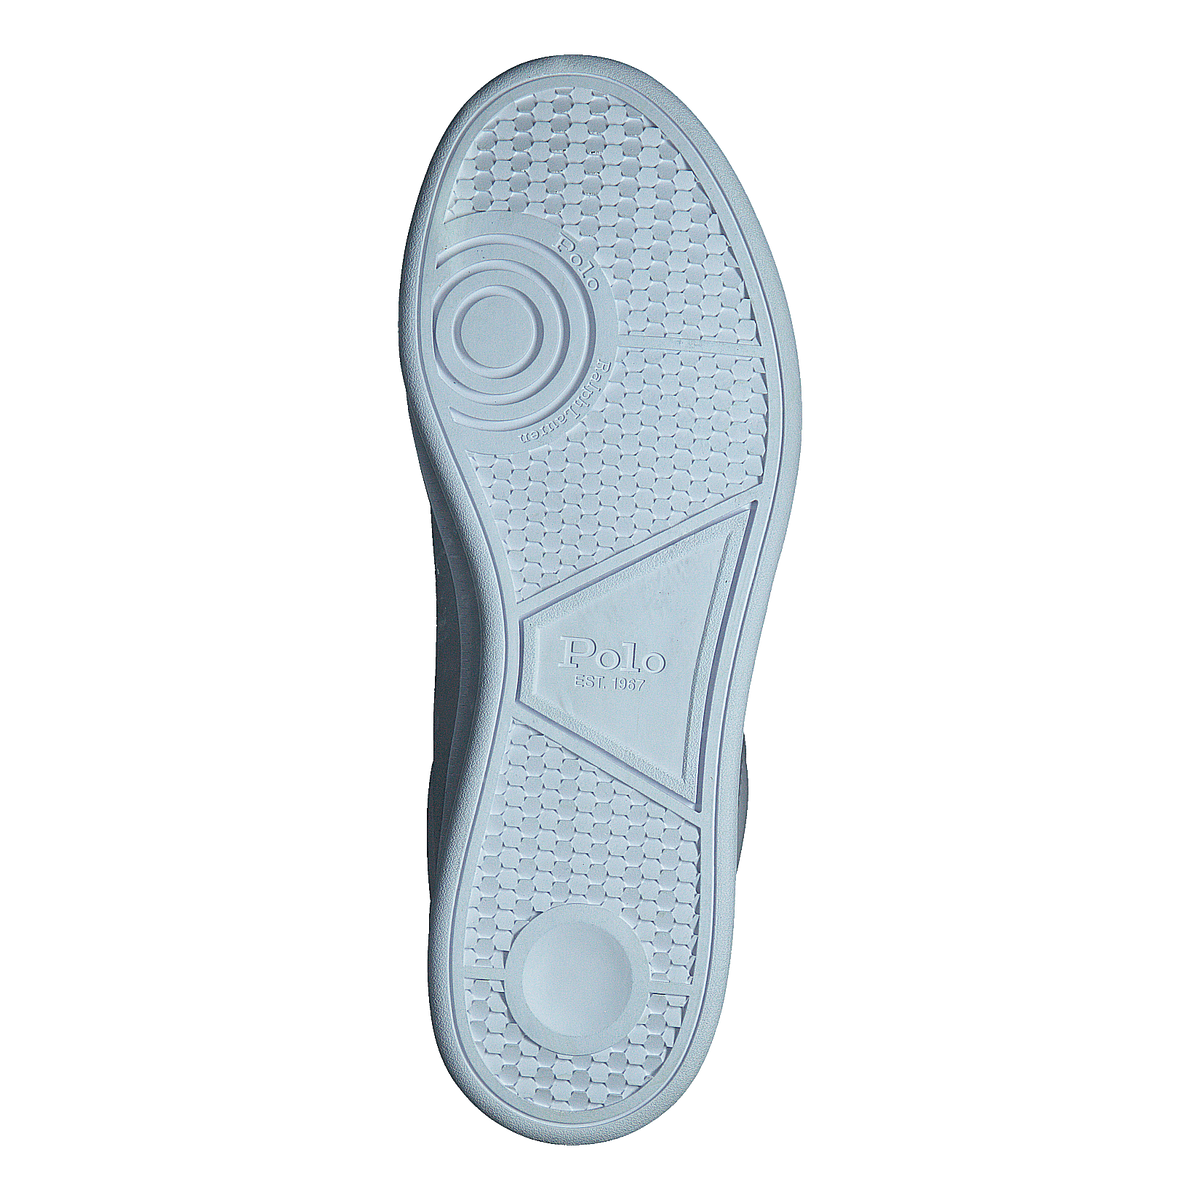 Heritage Court II Leather Sneaker White / Tan